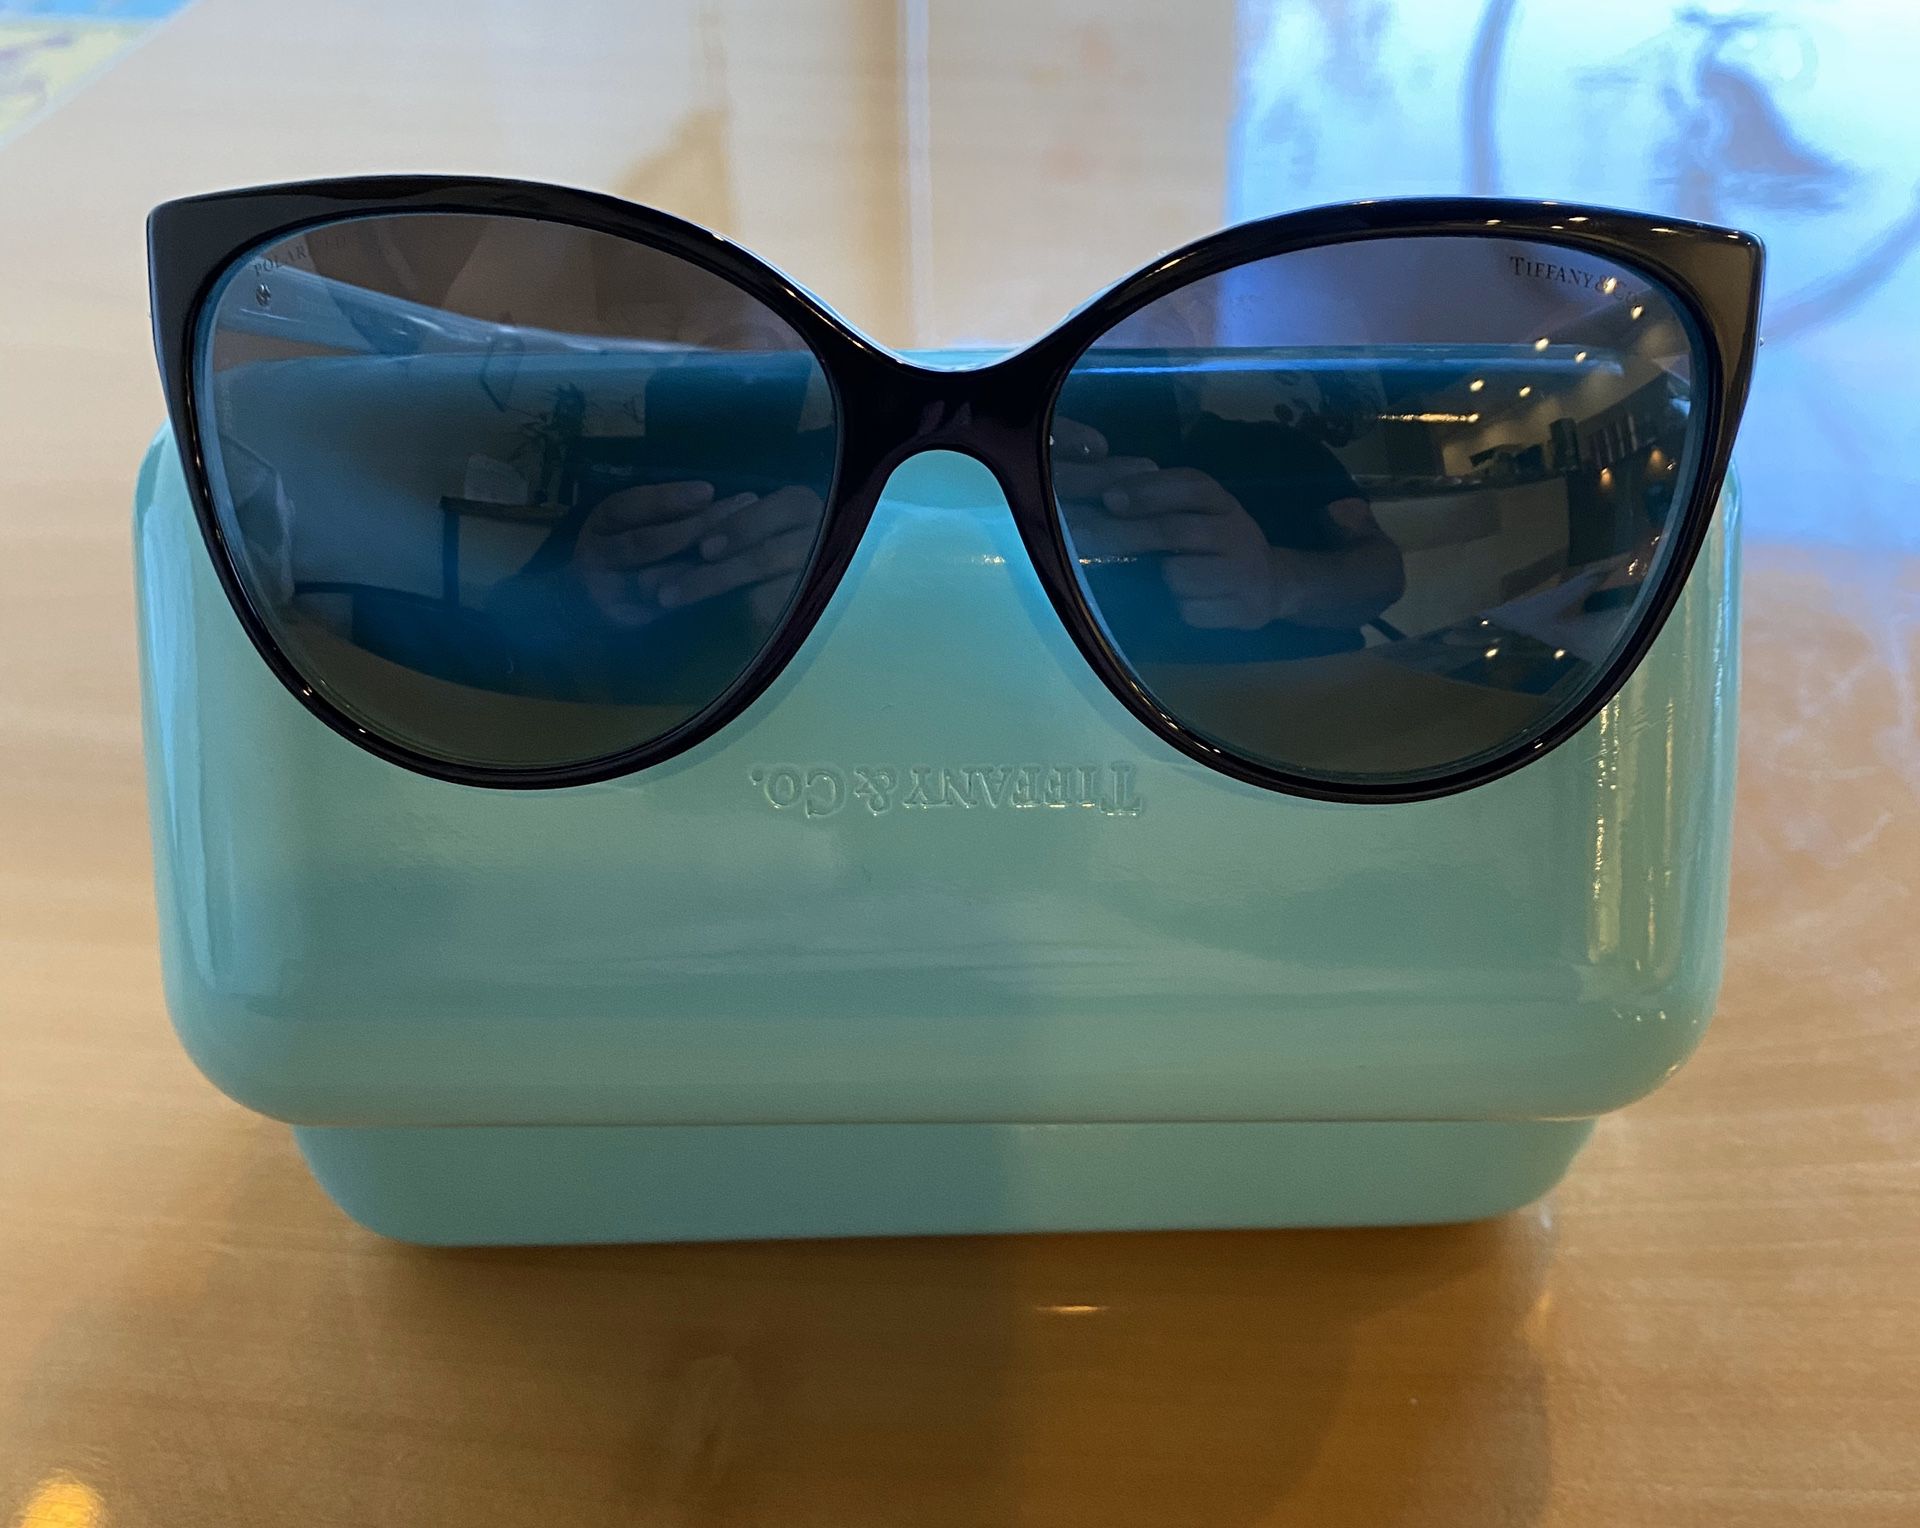 Tiffany & Co. Sunglasses Black Polarized Grey Gradient Lens 58mm